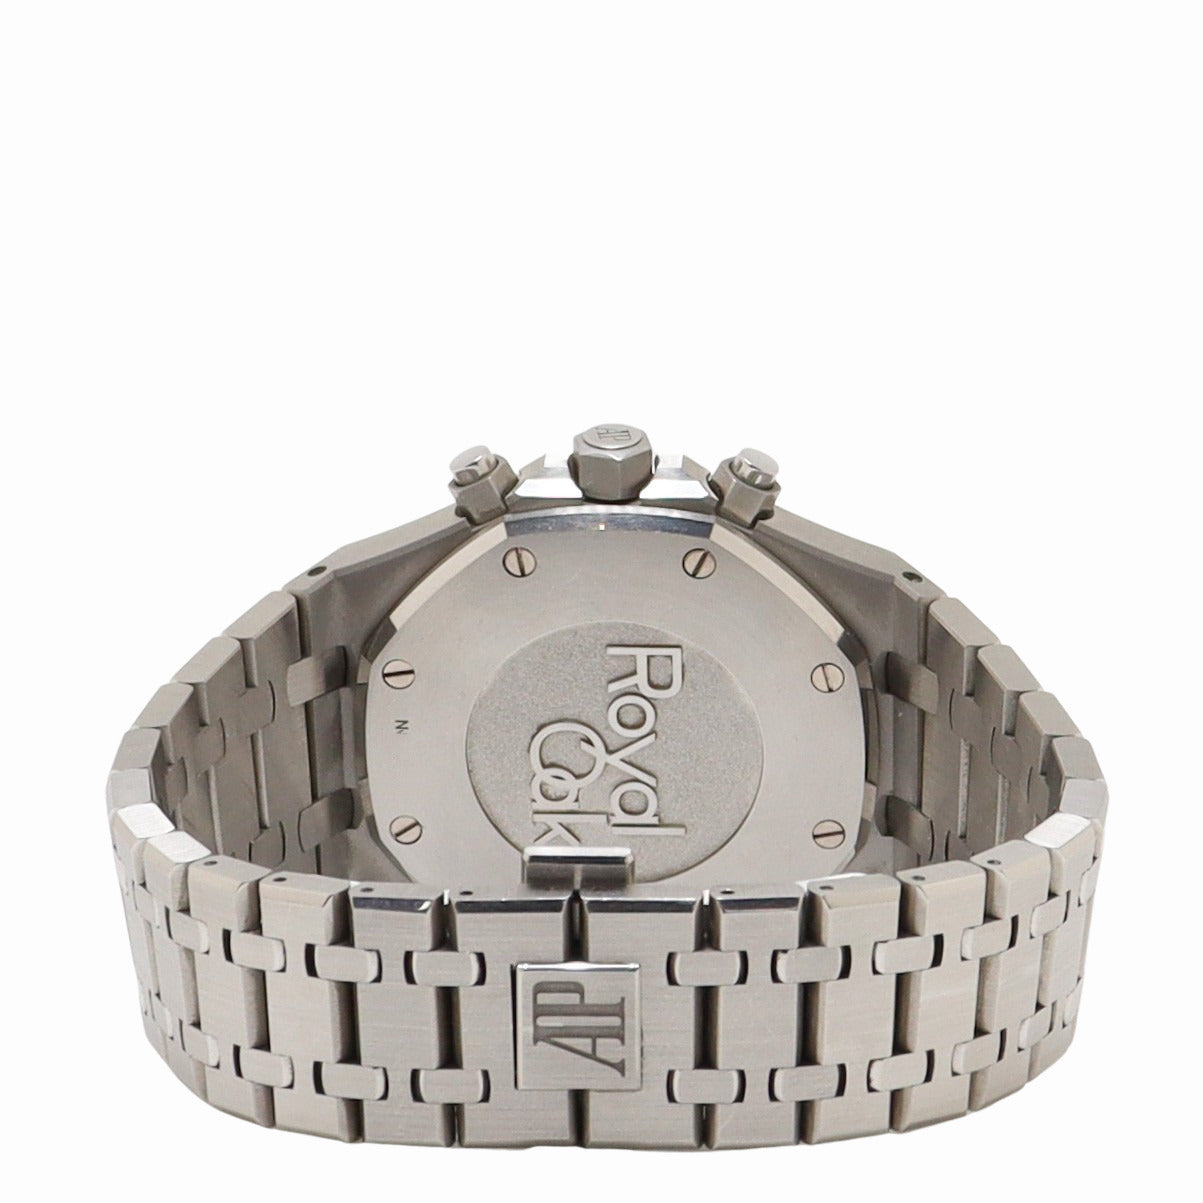 Audemars Piguet Royal Oak Stainless Steel 41mm White Chronograph Dial Watch Ref# 26331ST.OO.1220ST.03 - Happy Jewelers Fine Jewelry Lifetime Warranty